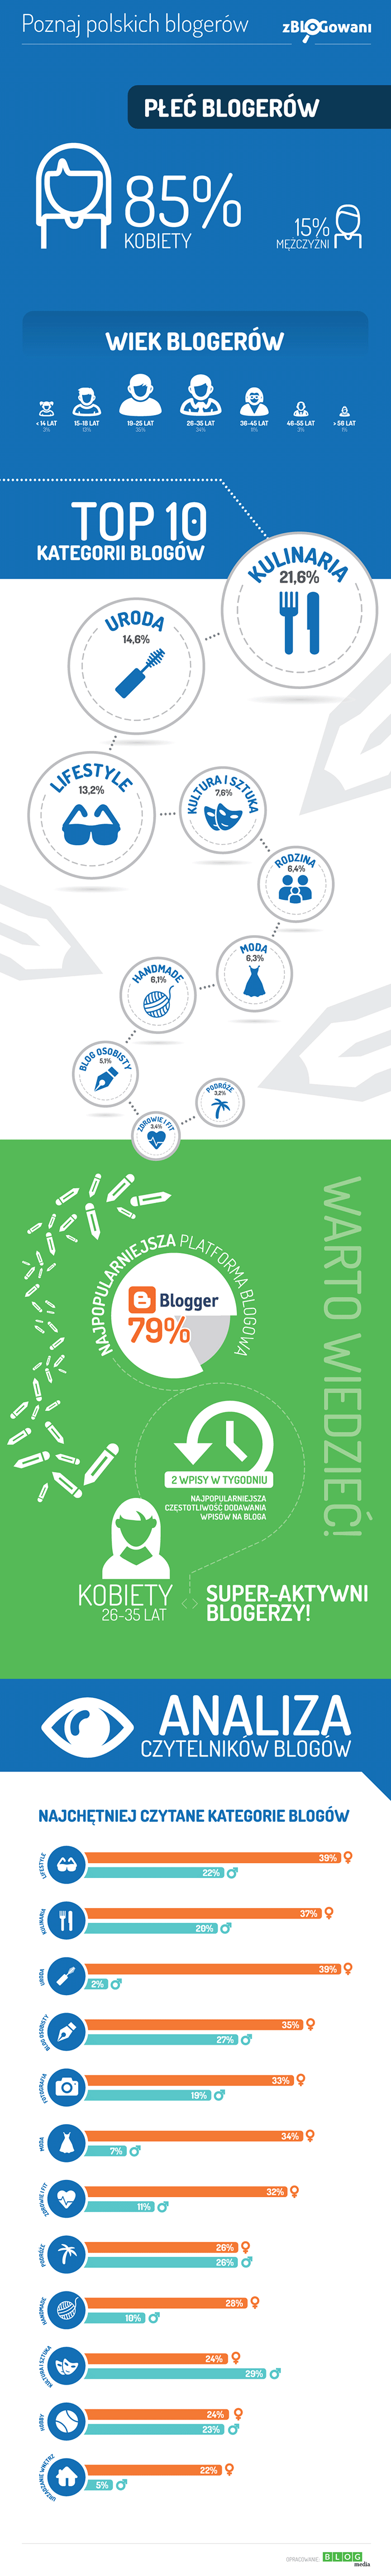 infografika-blogosfera-zblogowani-blogmedia